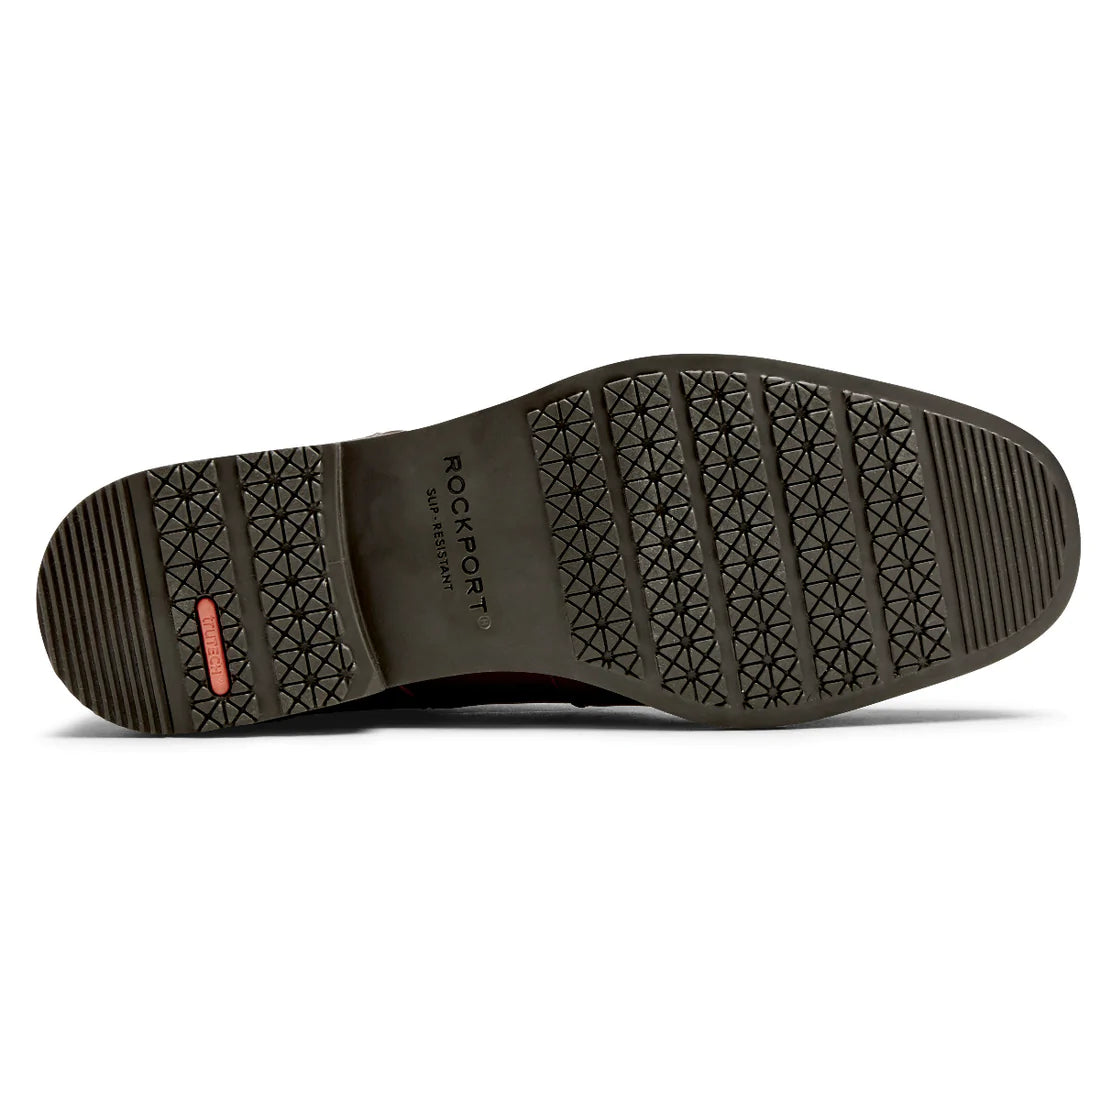 sole of shoe with rockport logo Rockport Men's Taylor Waterproof Cap Toe - Tan